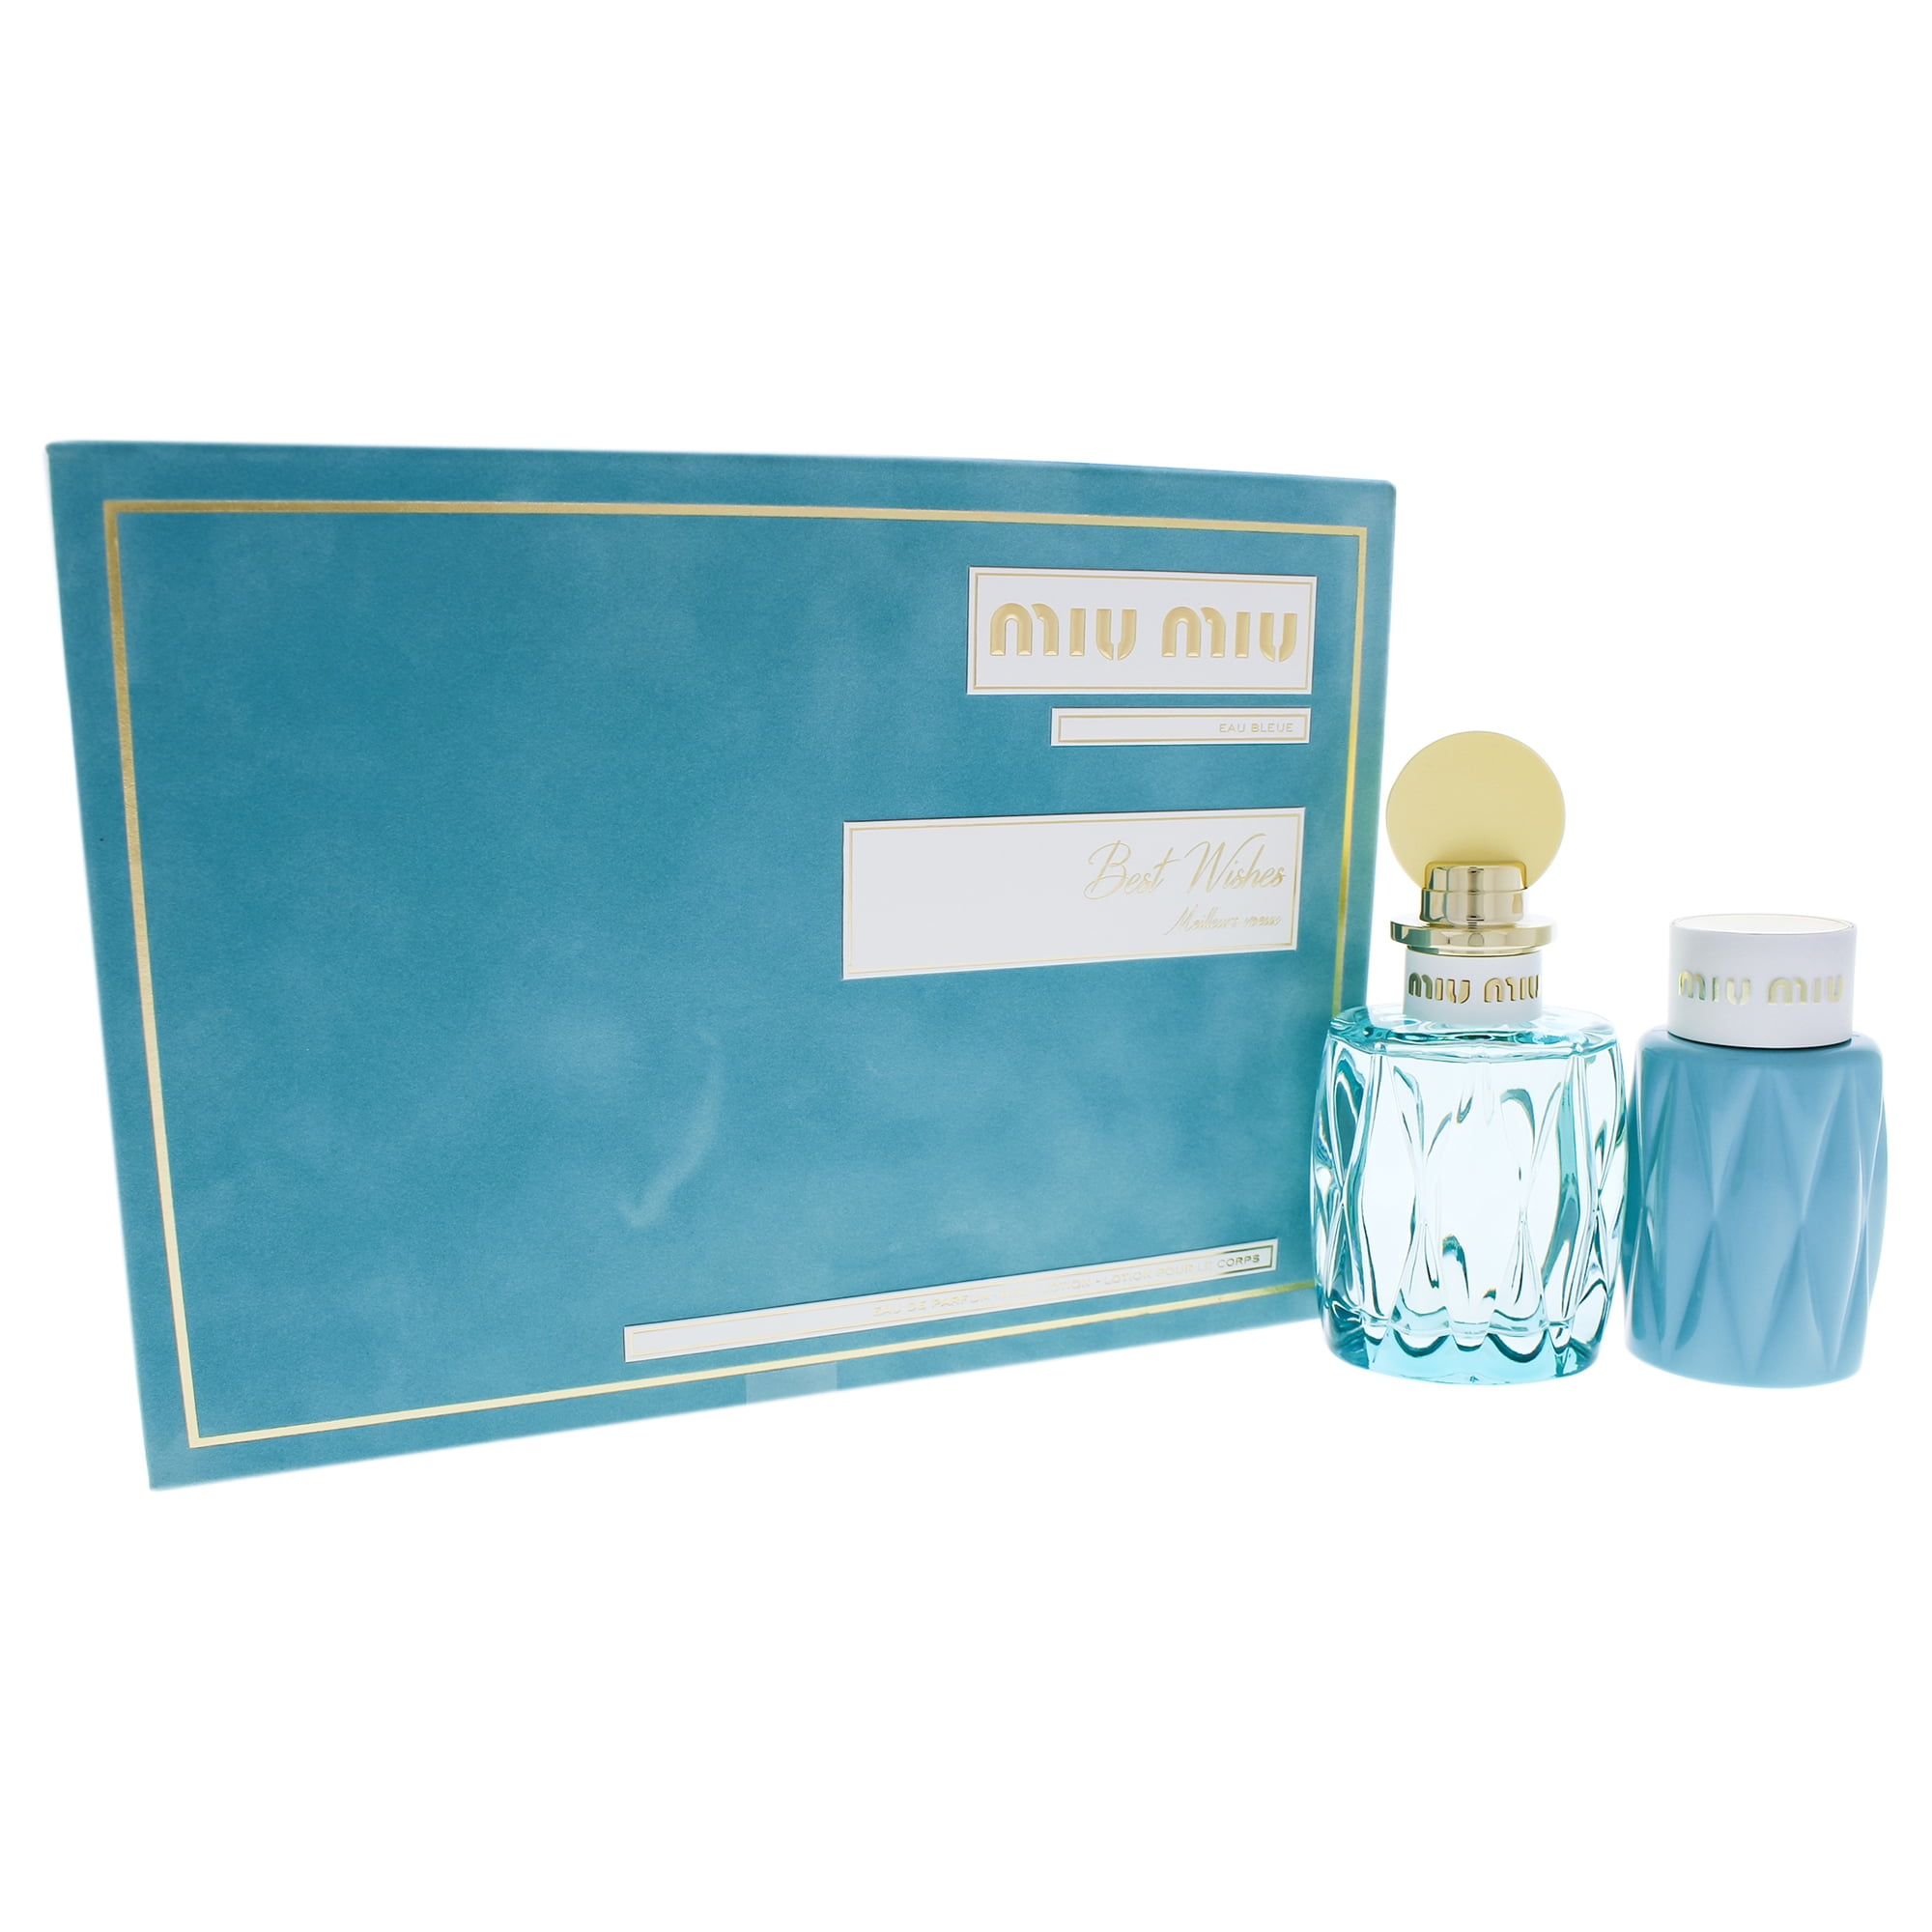 Miu Miu - Miu Miu Leau Bleue Perfume Gift Set for Women, 2 Pieces ...